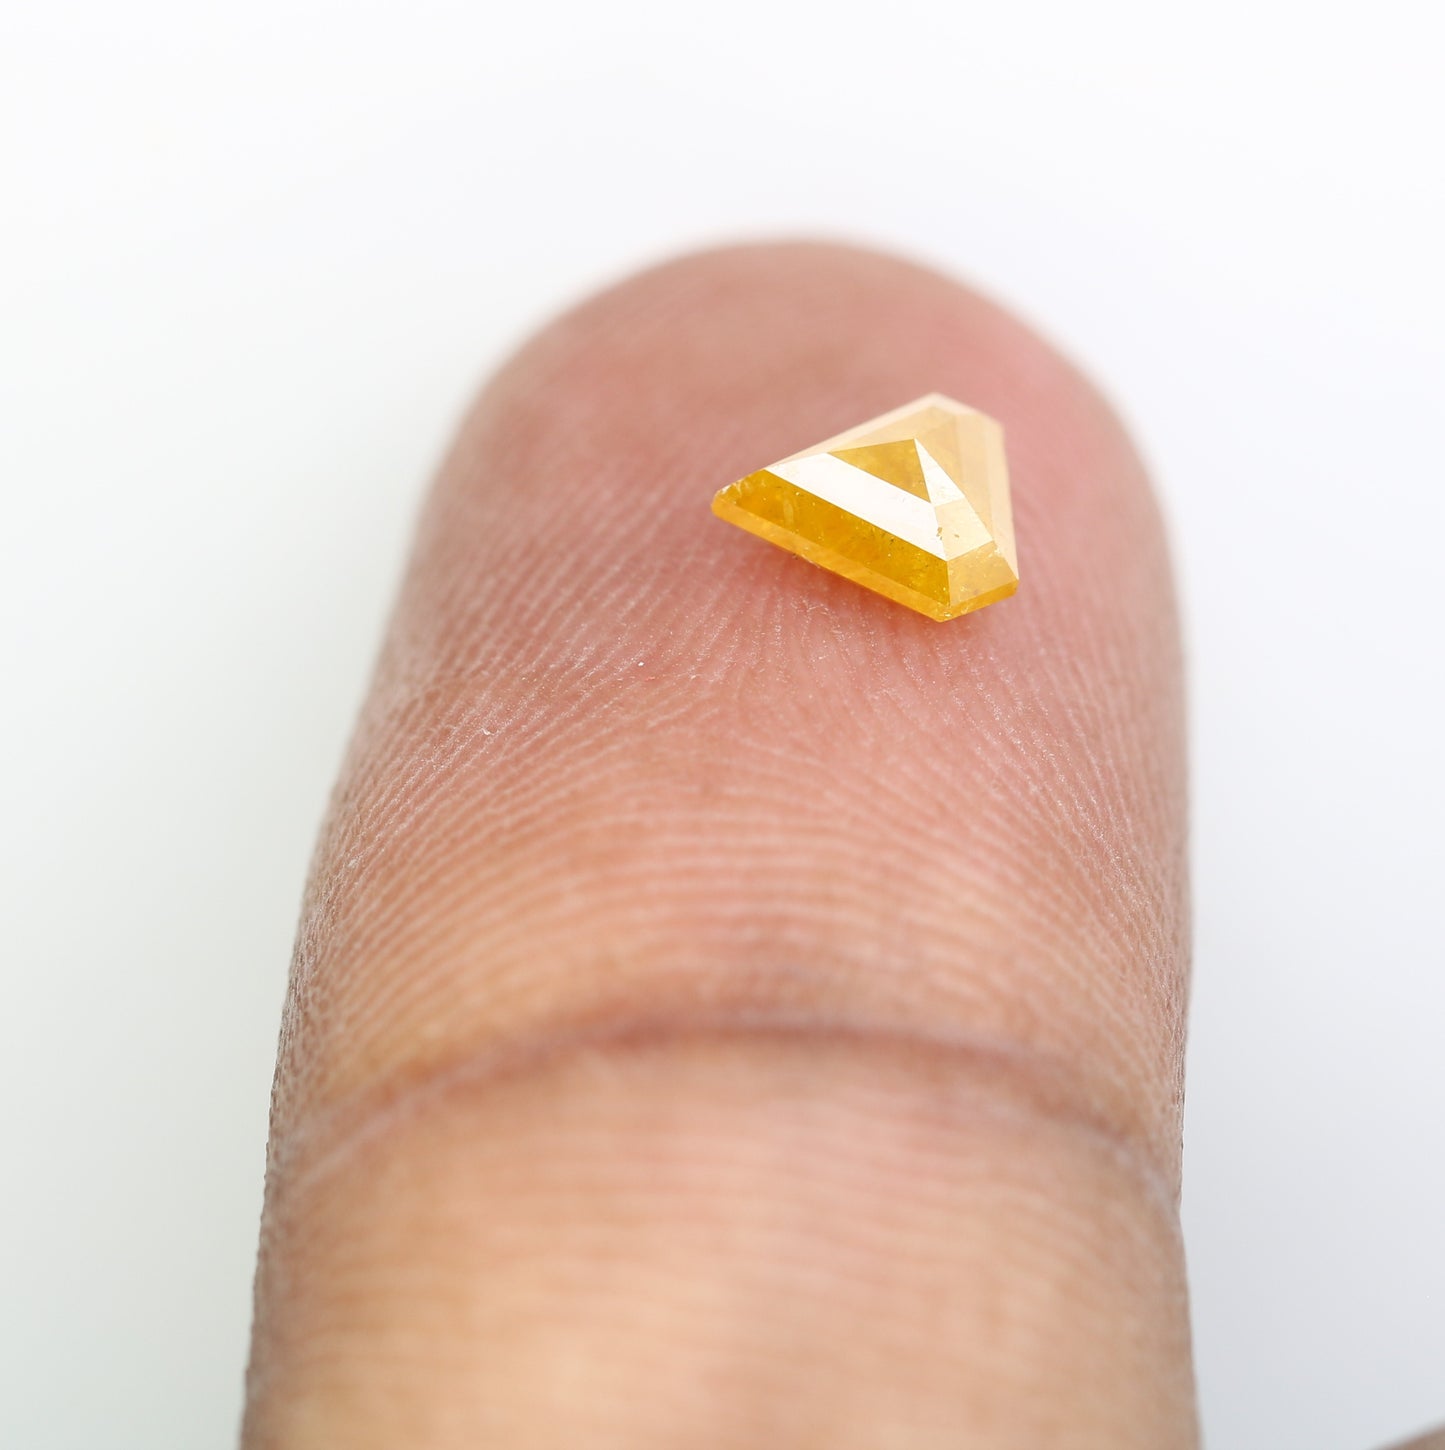 0.62 CT Diamond Shape Loose Rustic Fancy Yellow 6.00 MM Diamond For Wedding Ring